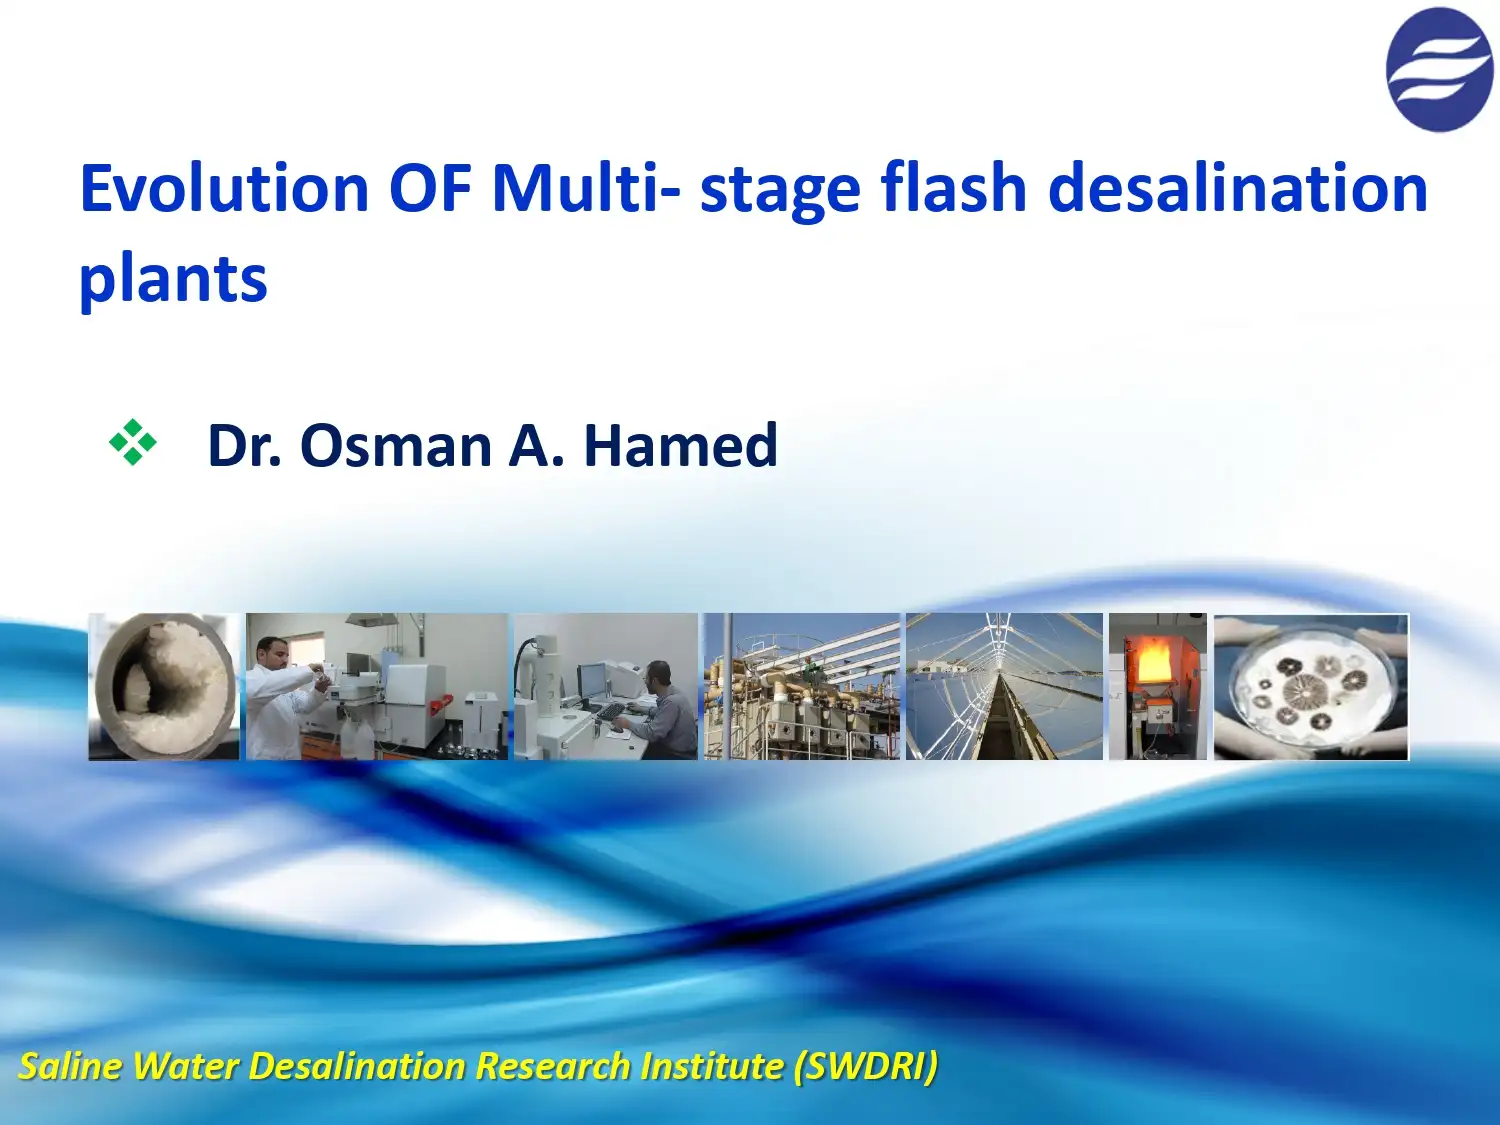 Evolution of Multi- Stage Flash Desalination Plants